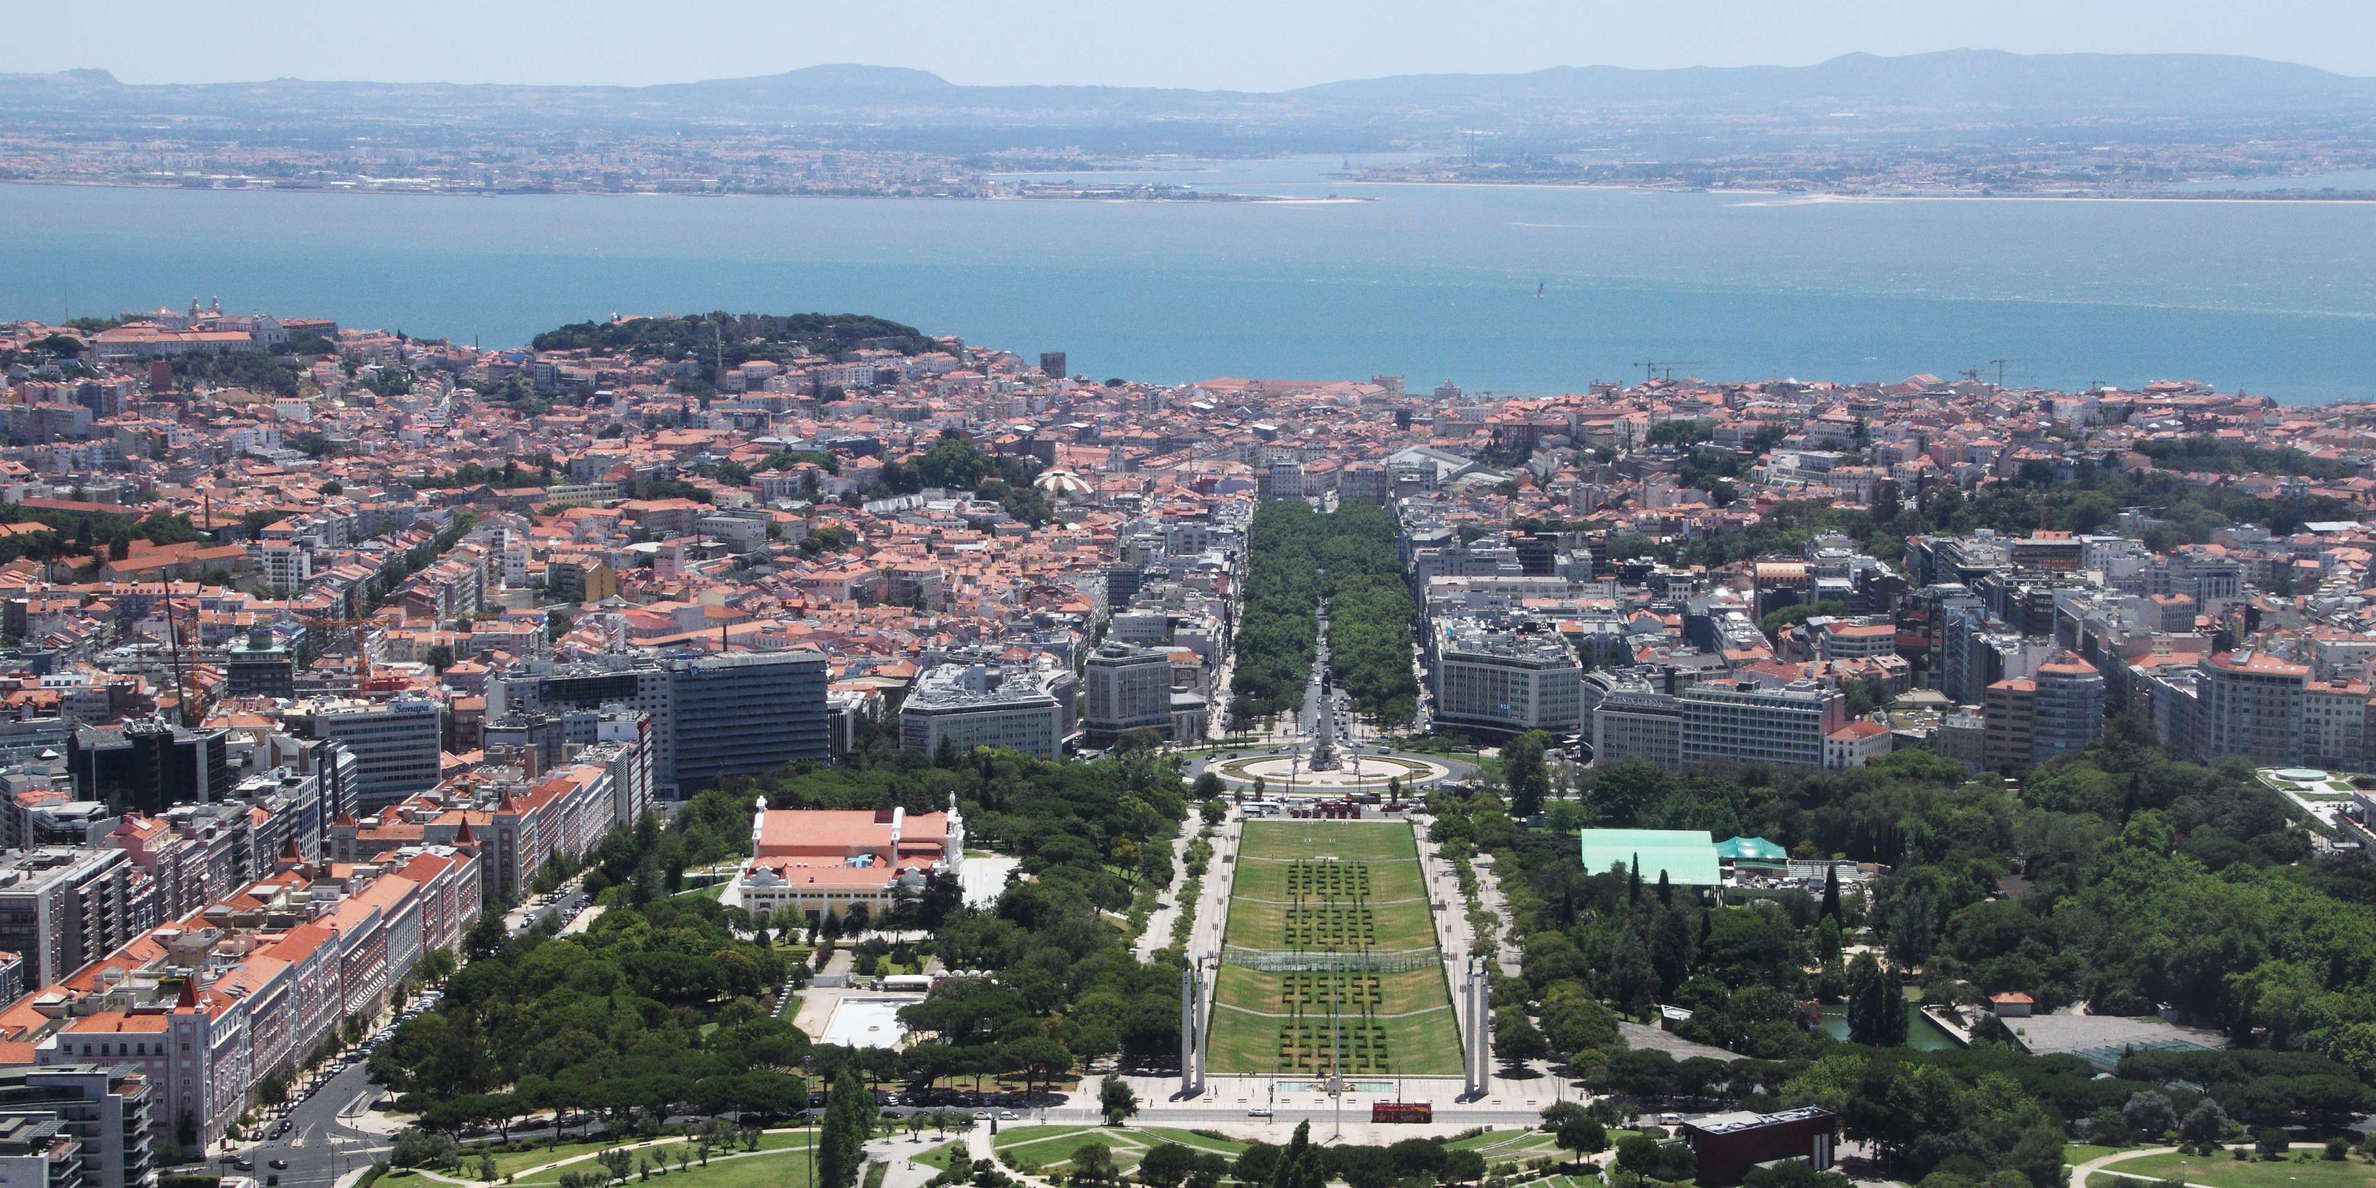 Lisboa with Praça Marquês de Pombal